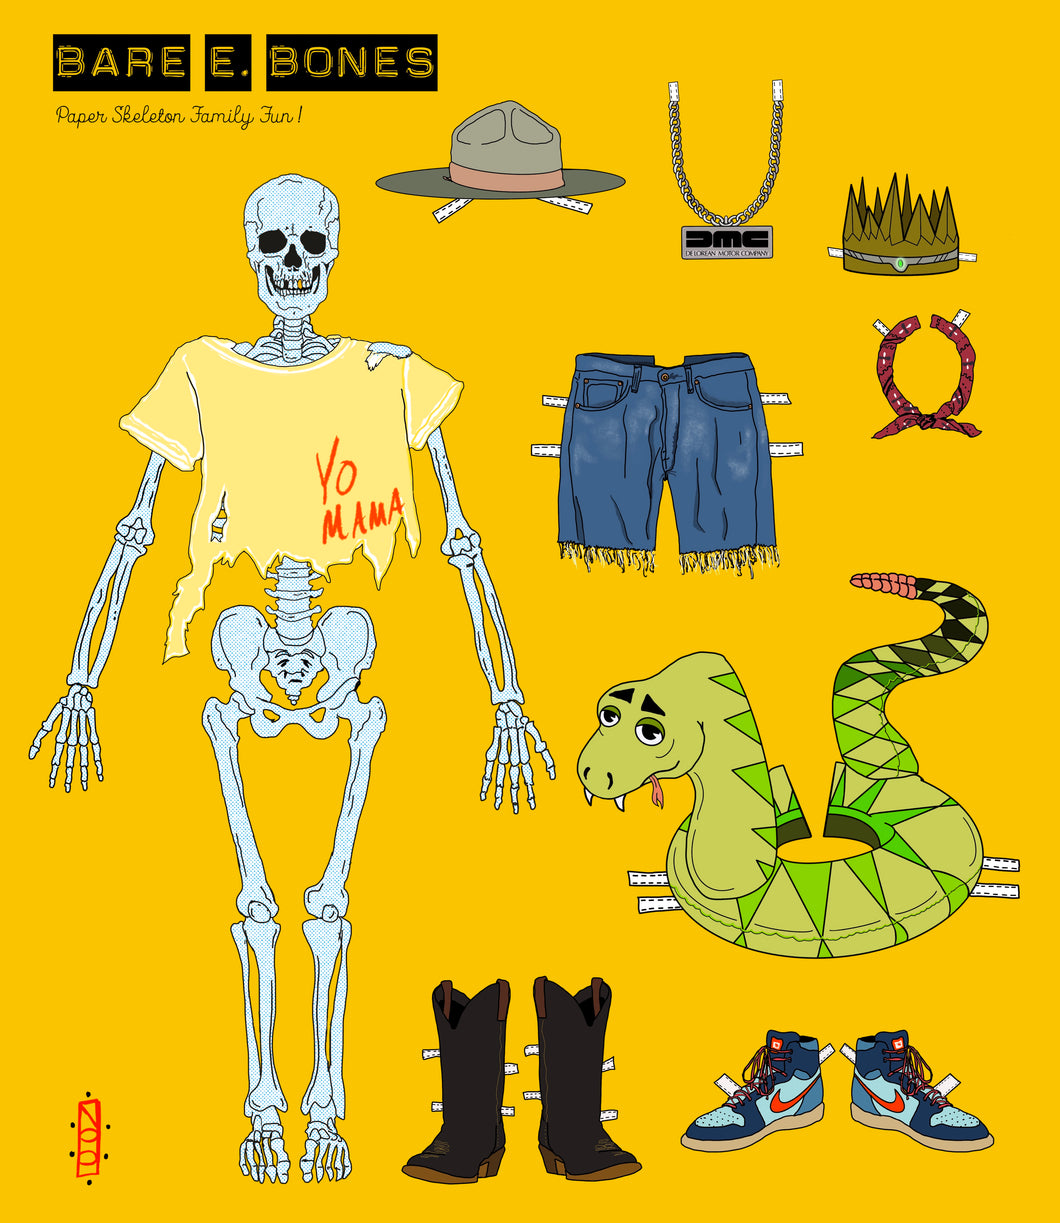 Bare E. Bones Print (Paper Skeleton Family Fun!)